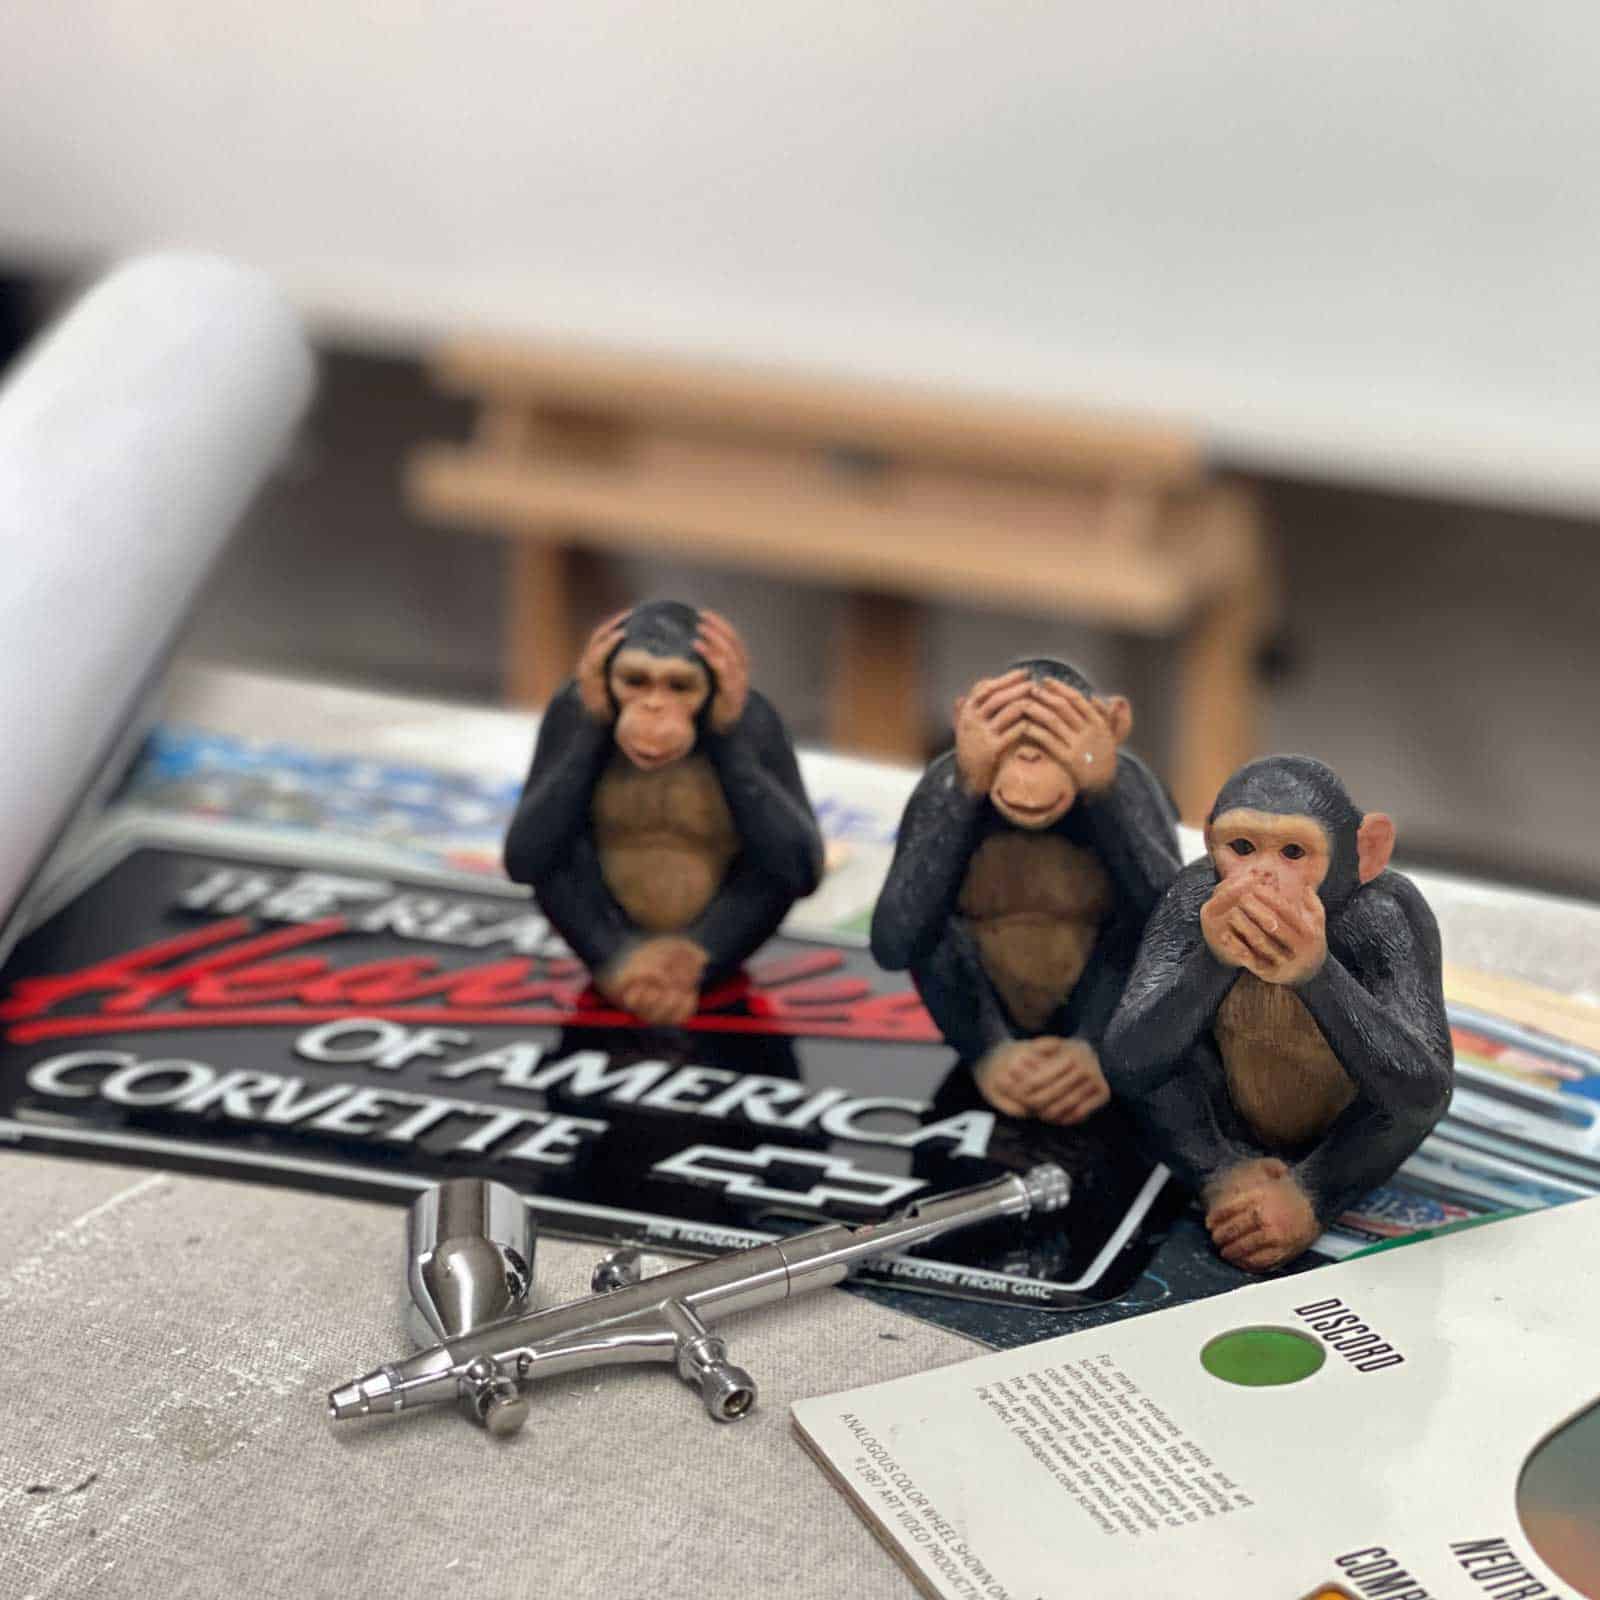 The Corvette Art Monkeys with Iwata Airbrush